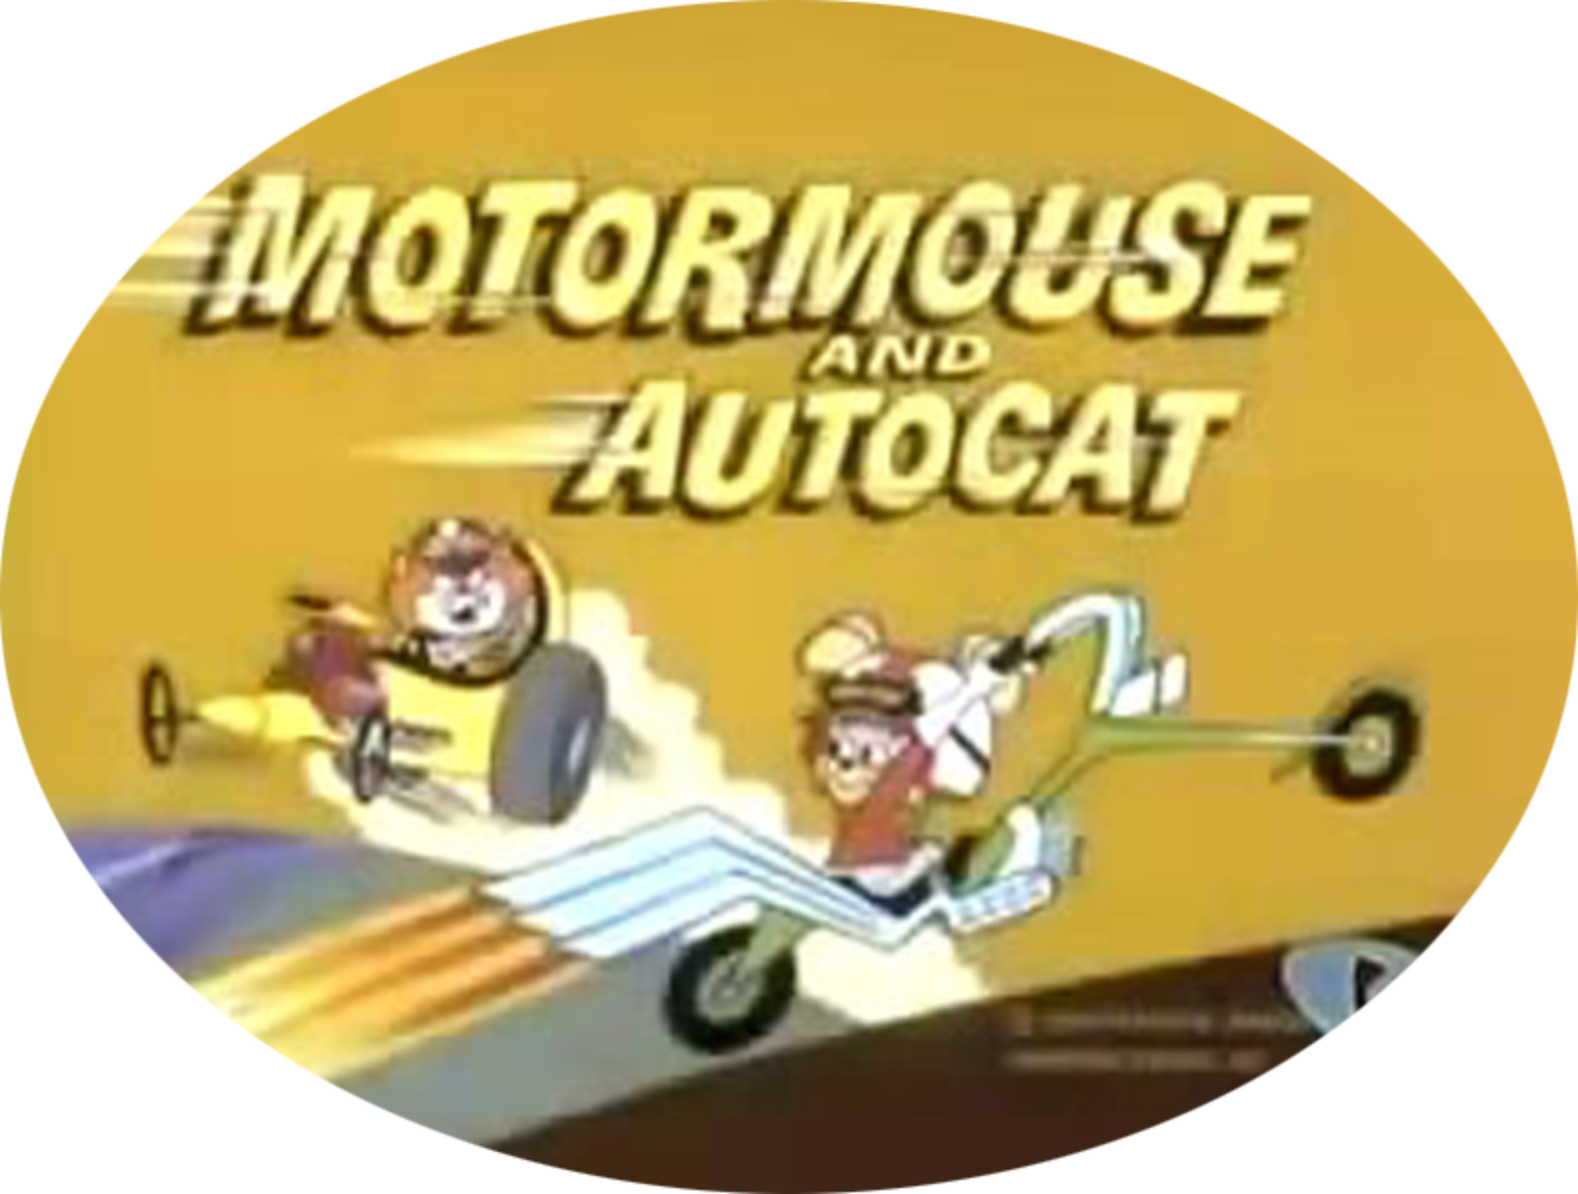 Motormouse and Autocat (1 DVD Box Set)